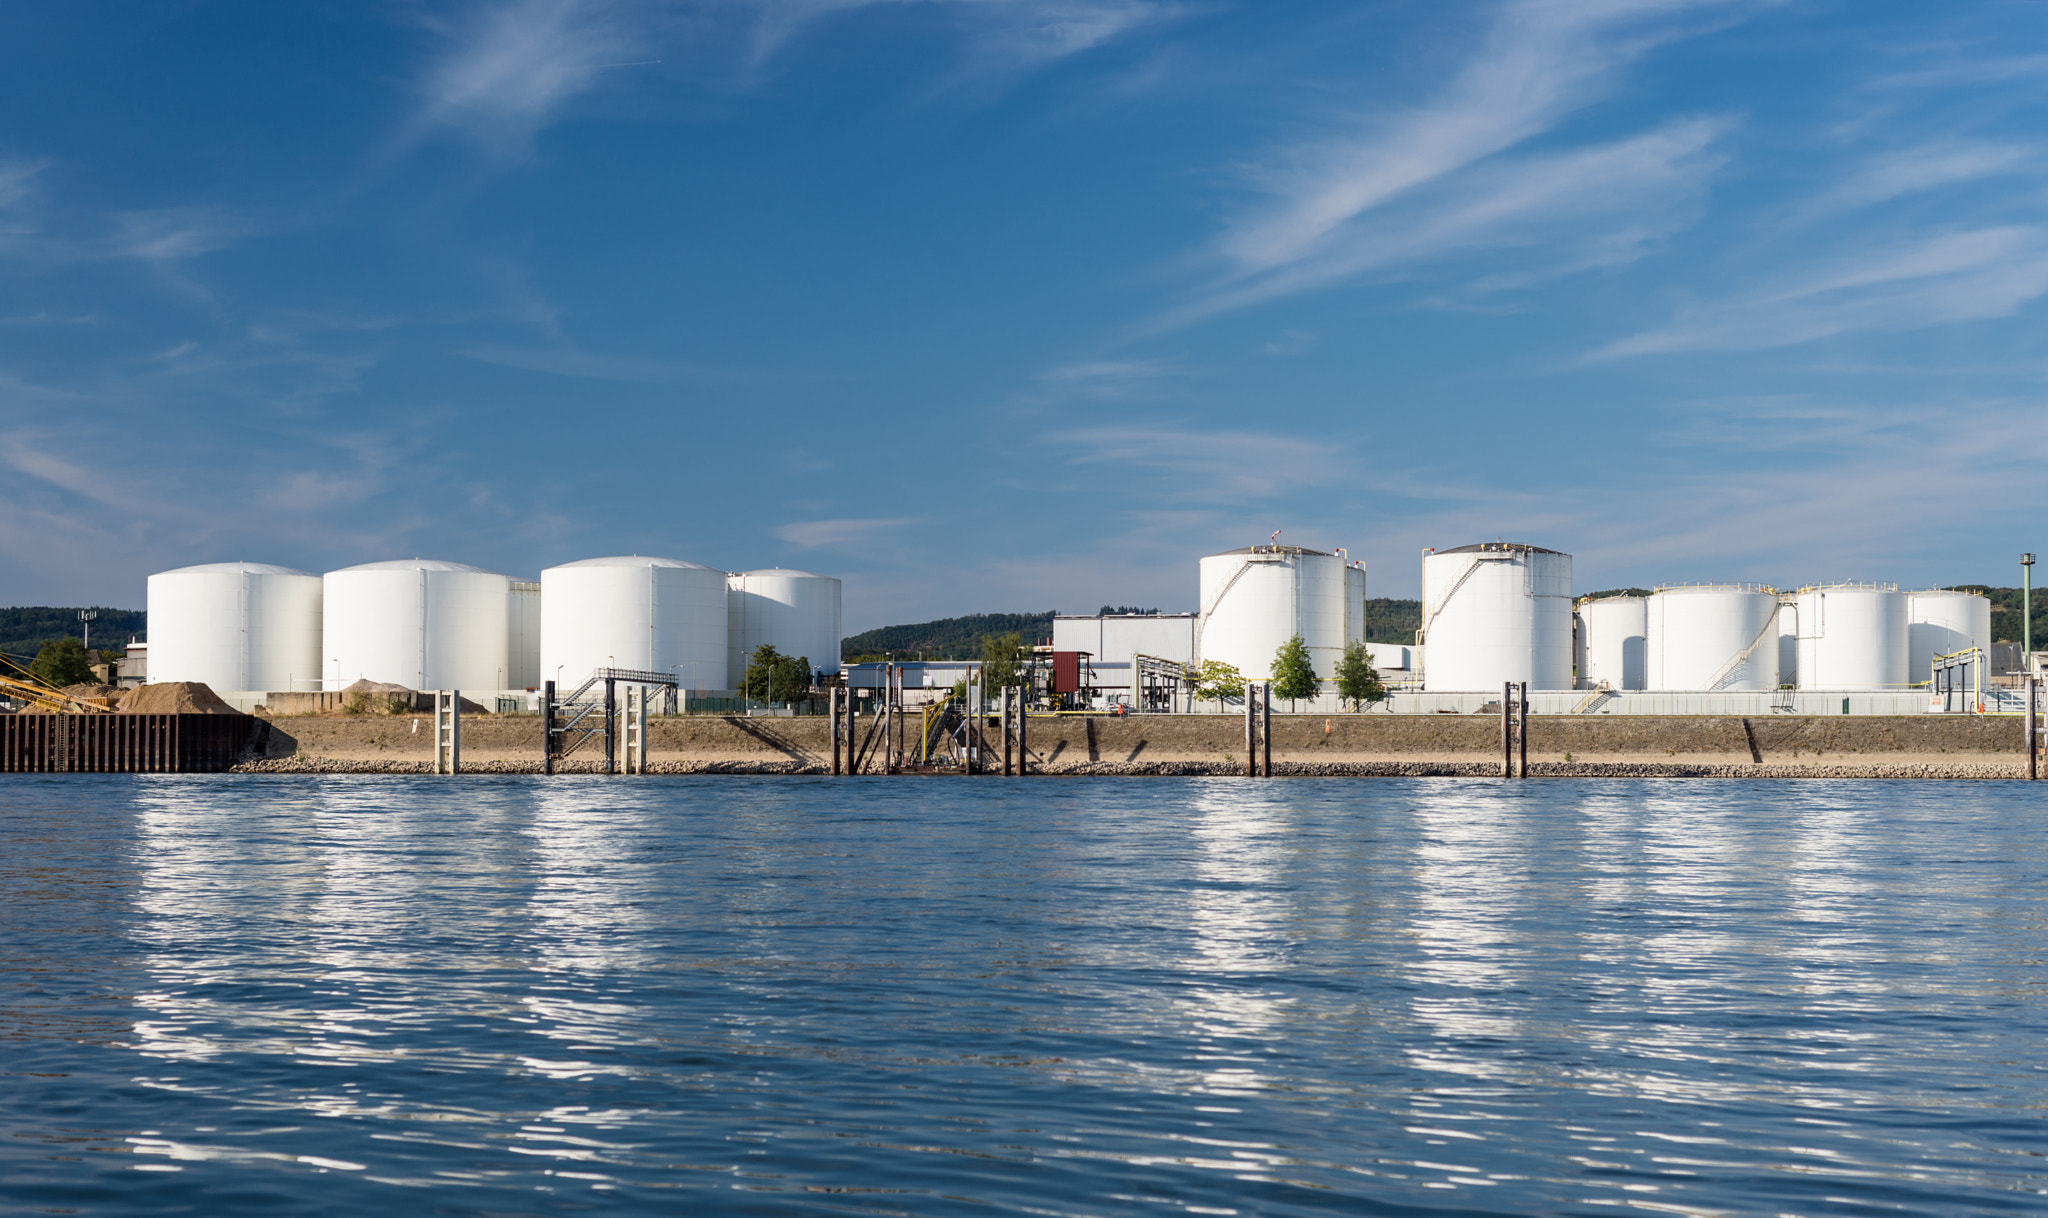 Storage silos,fuel depot of petroleum and gasoline